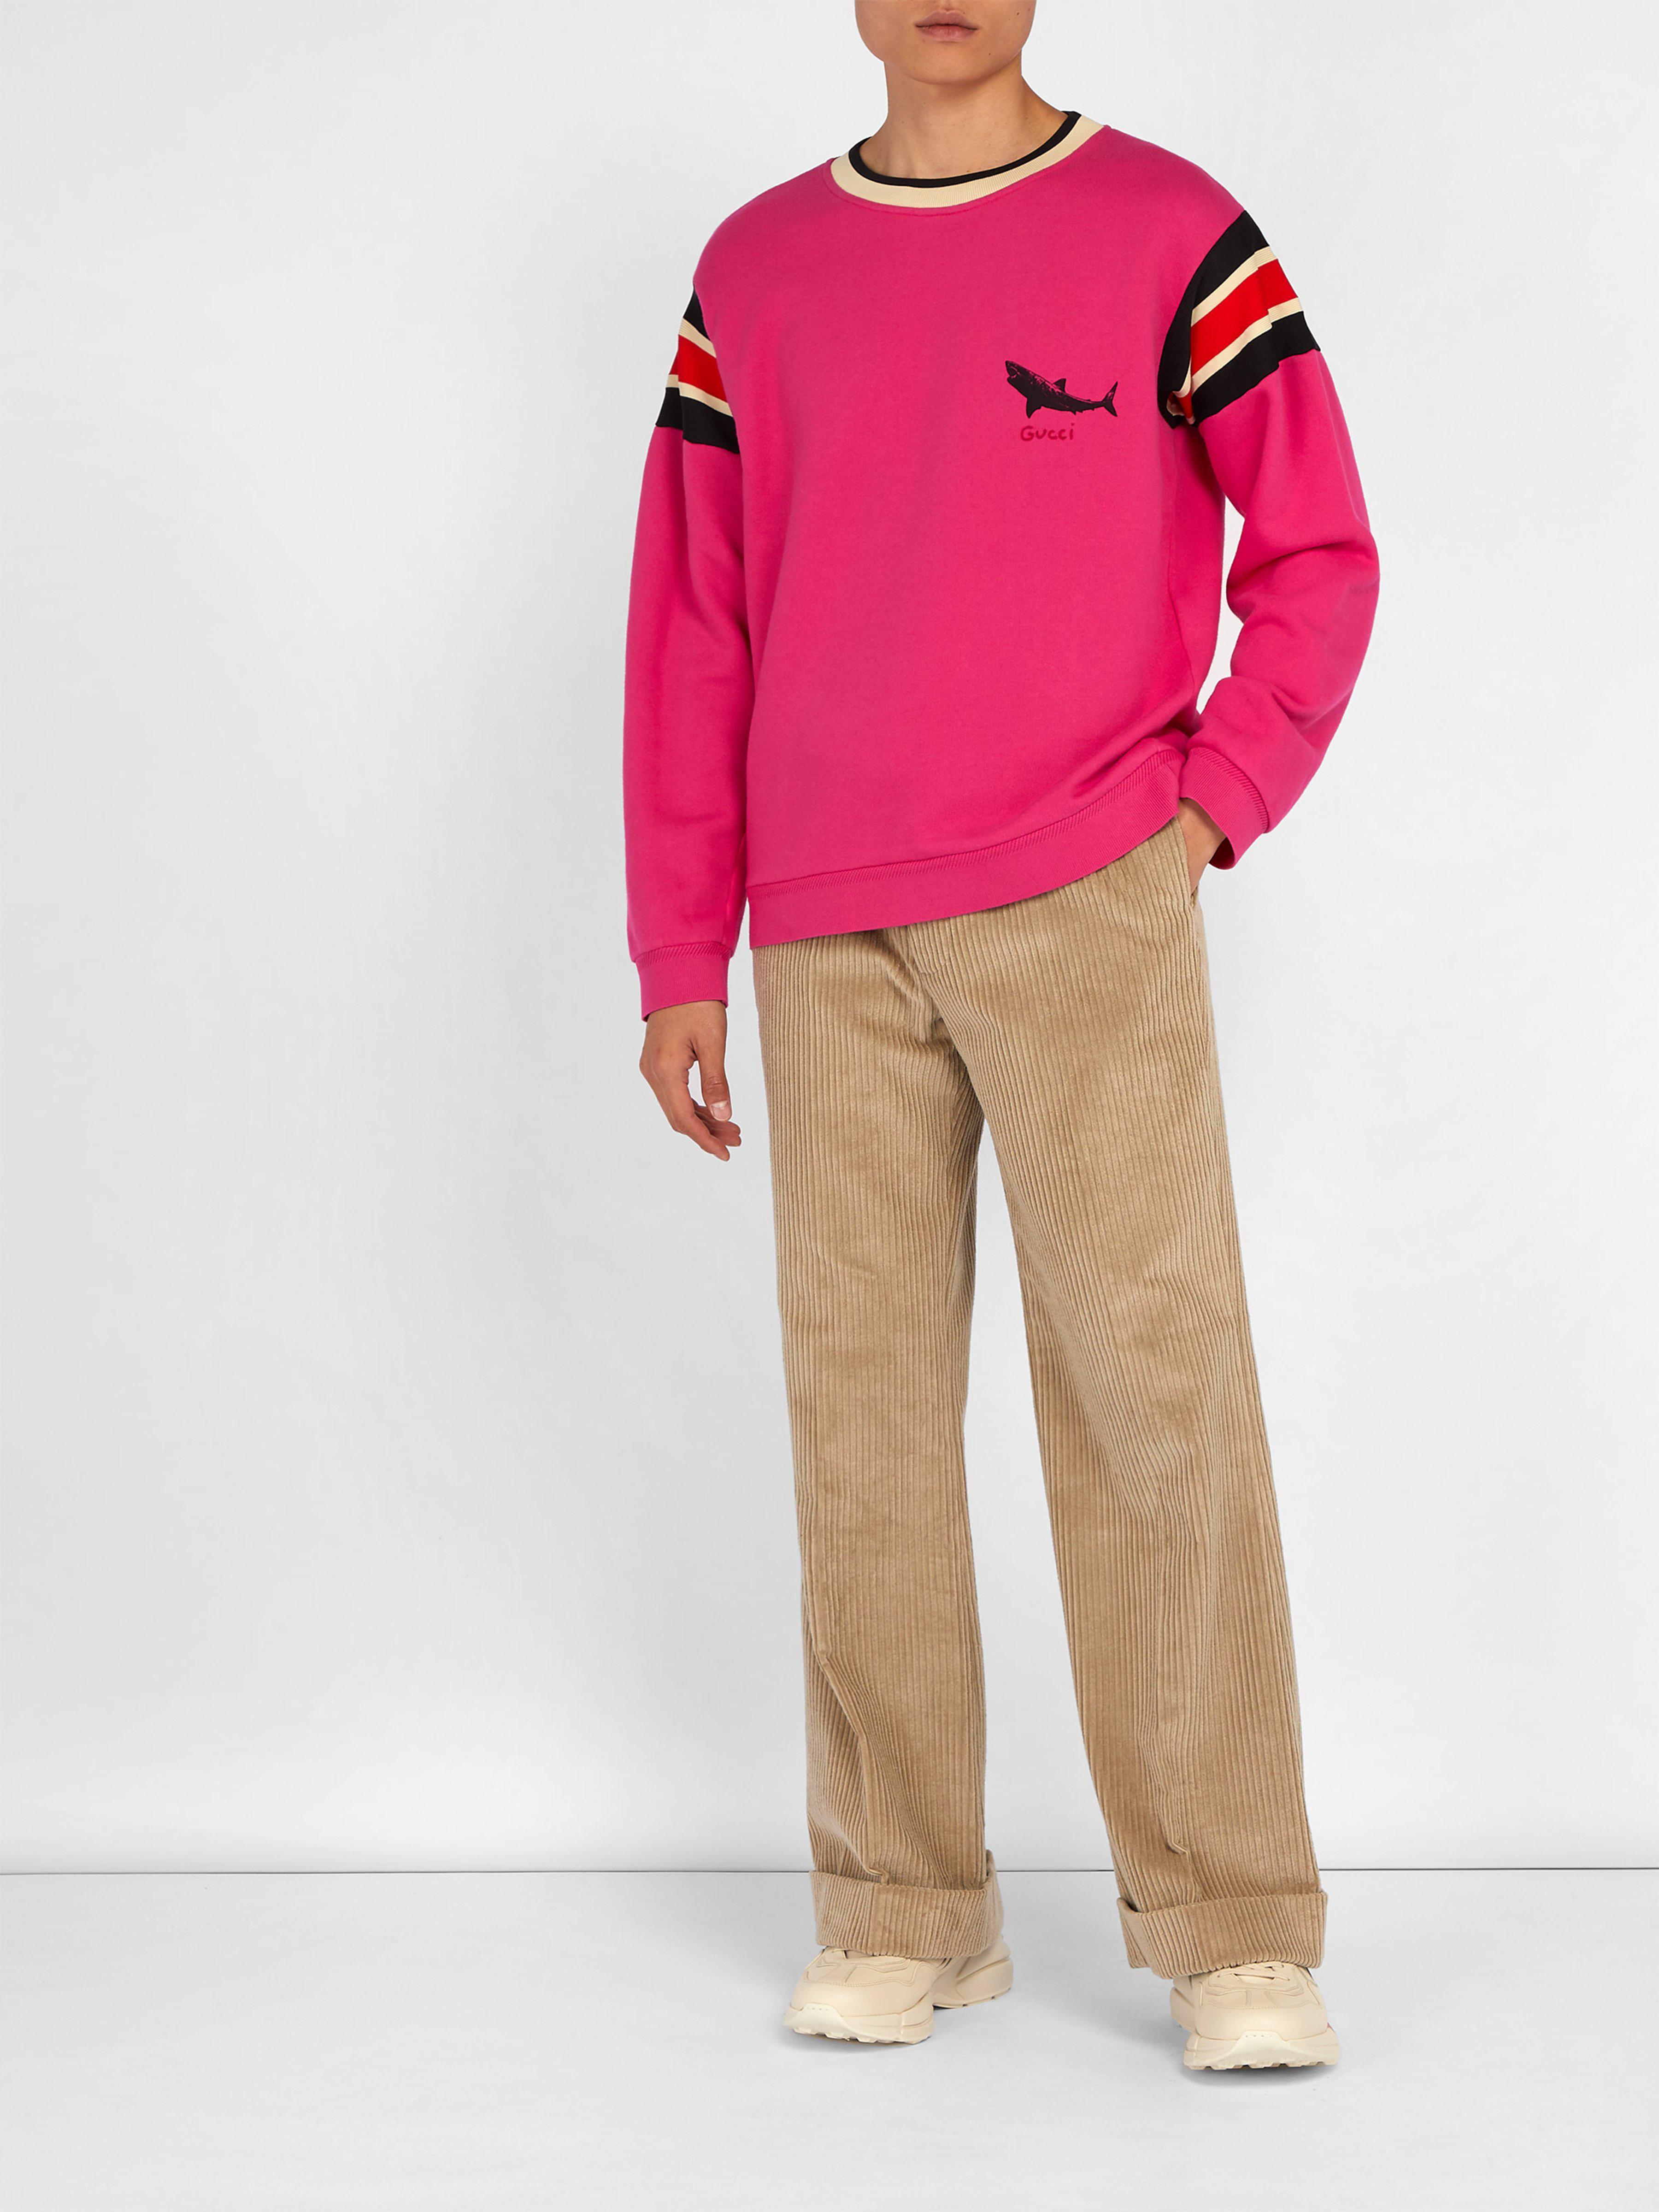 Gucci Shark Print Cotton Sweatshirt in Pink for Men - Lyst